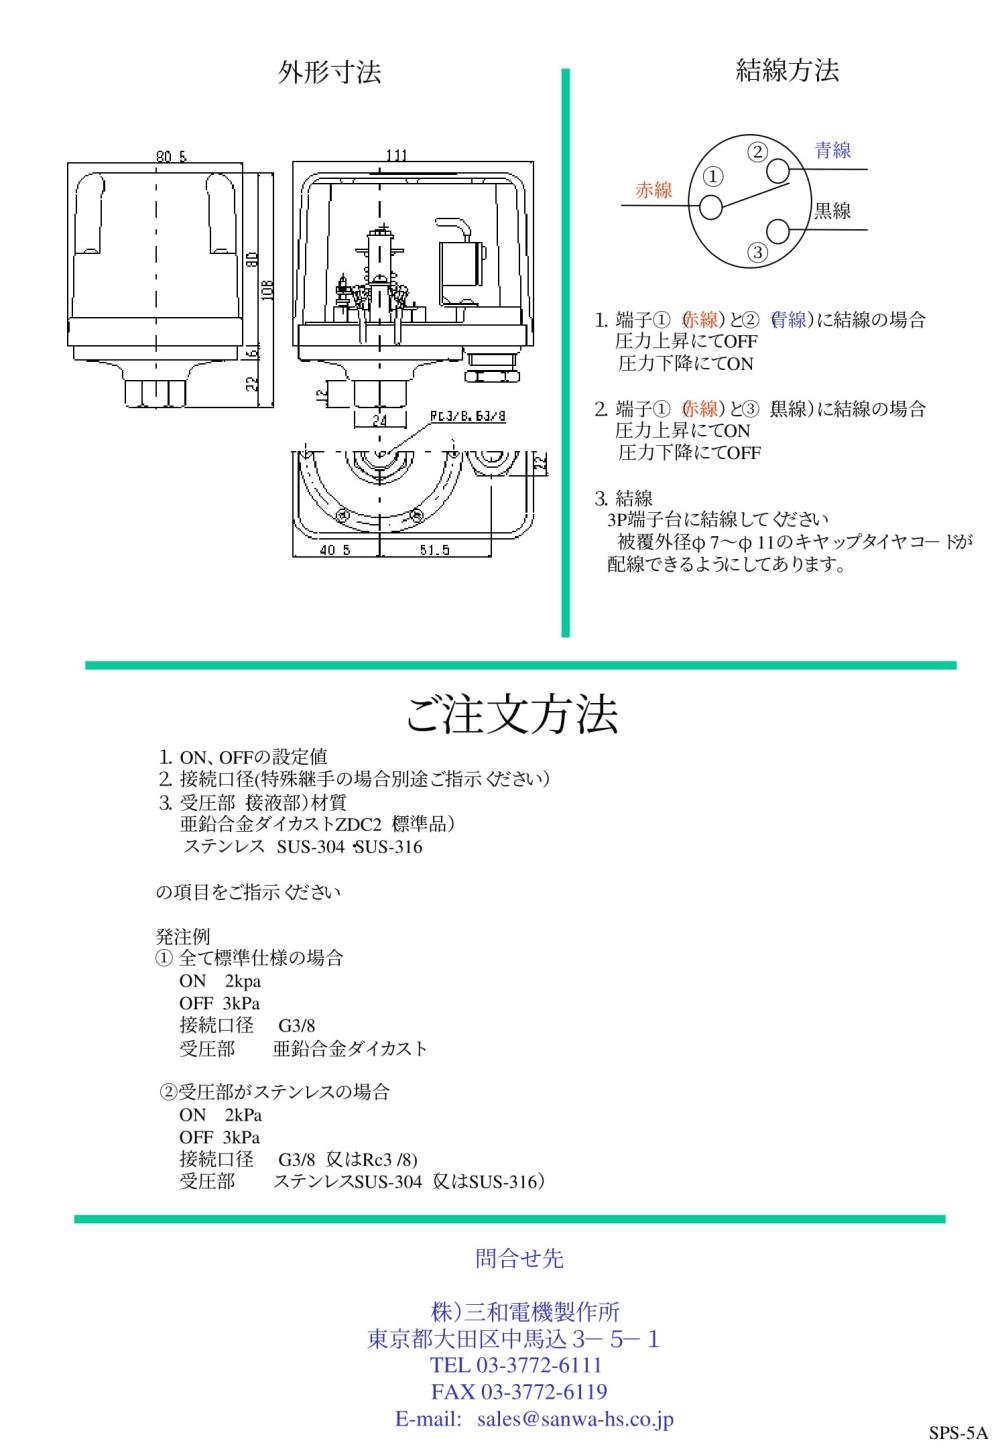 SANWA DENKI Pressure Switch SPS-5A, ZDC2 Series